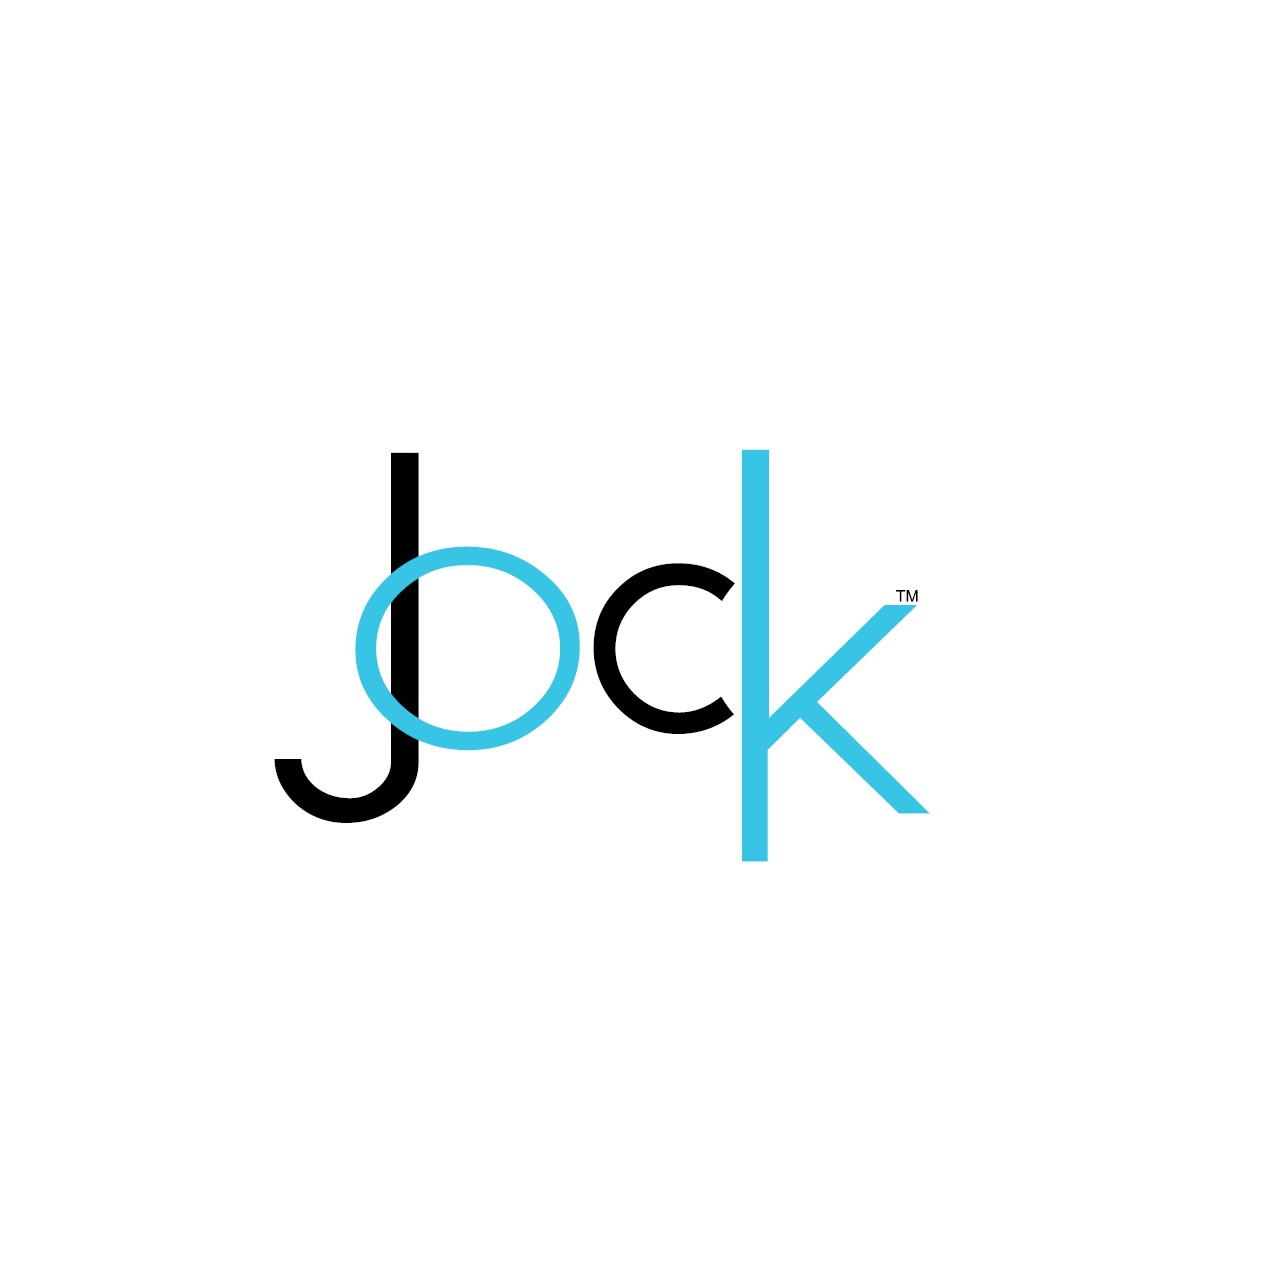 Jock Logo